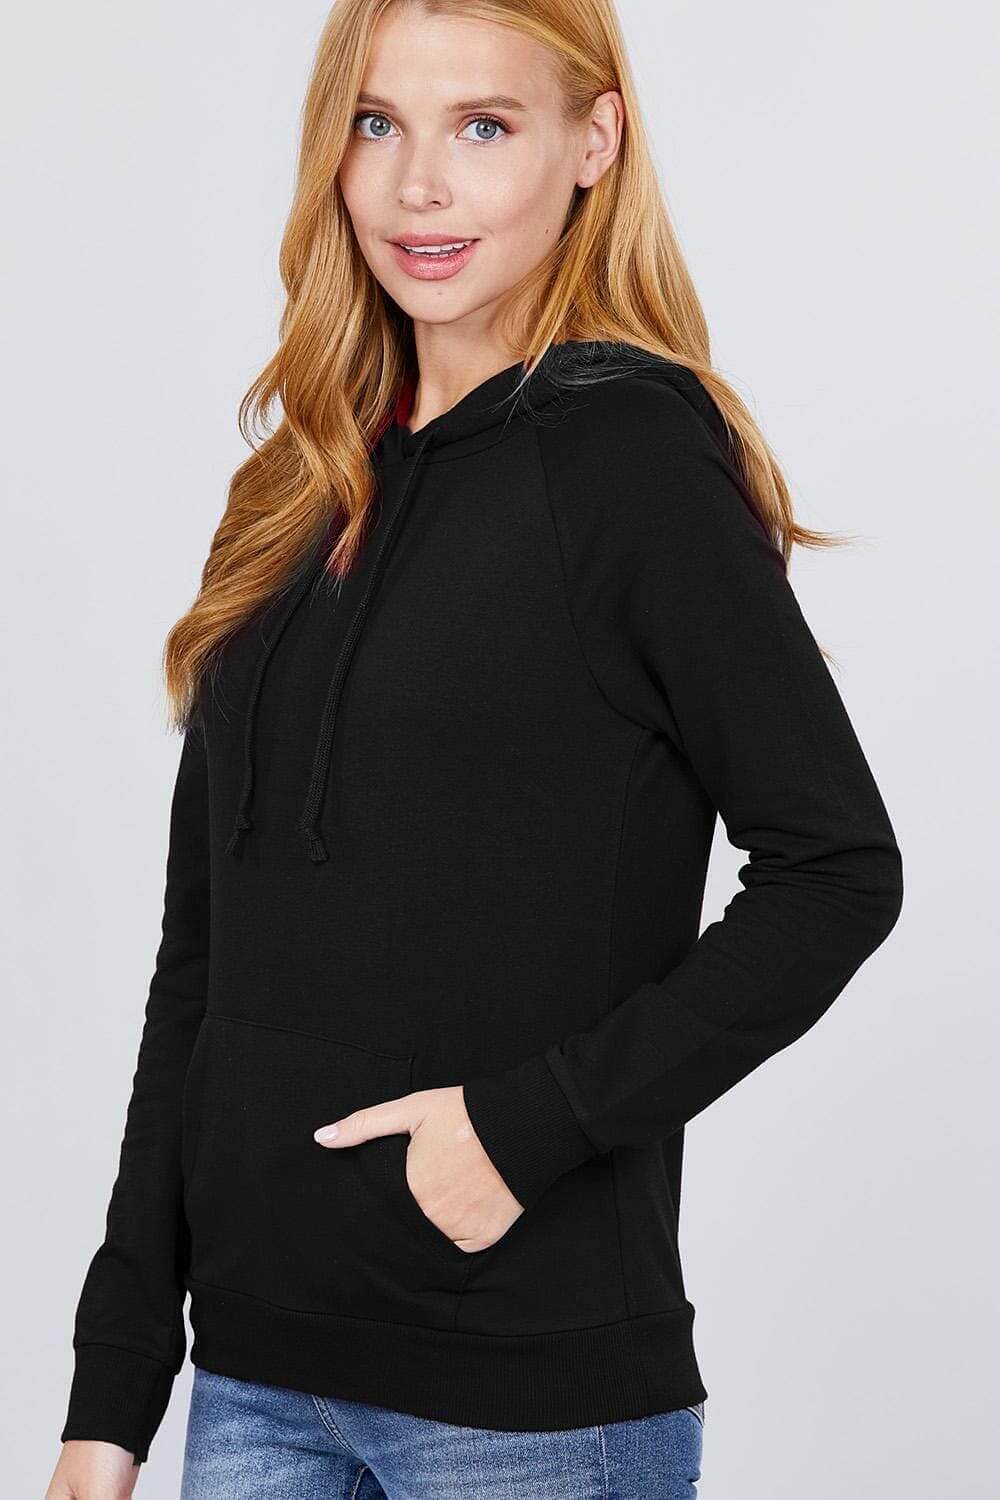 Black French Terry Long Sleeve Sweatshirt - Shopping Therapy M Sweatshirt